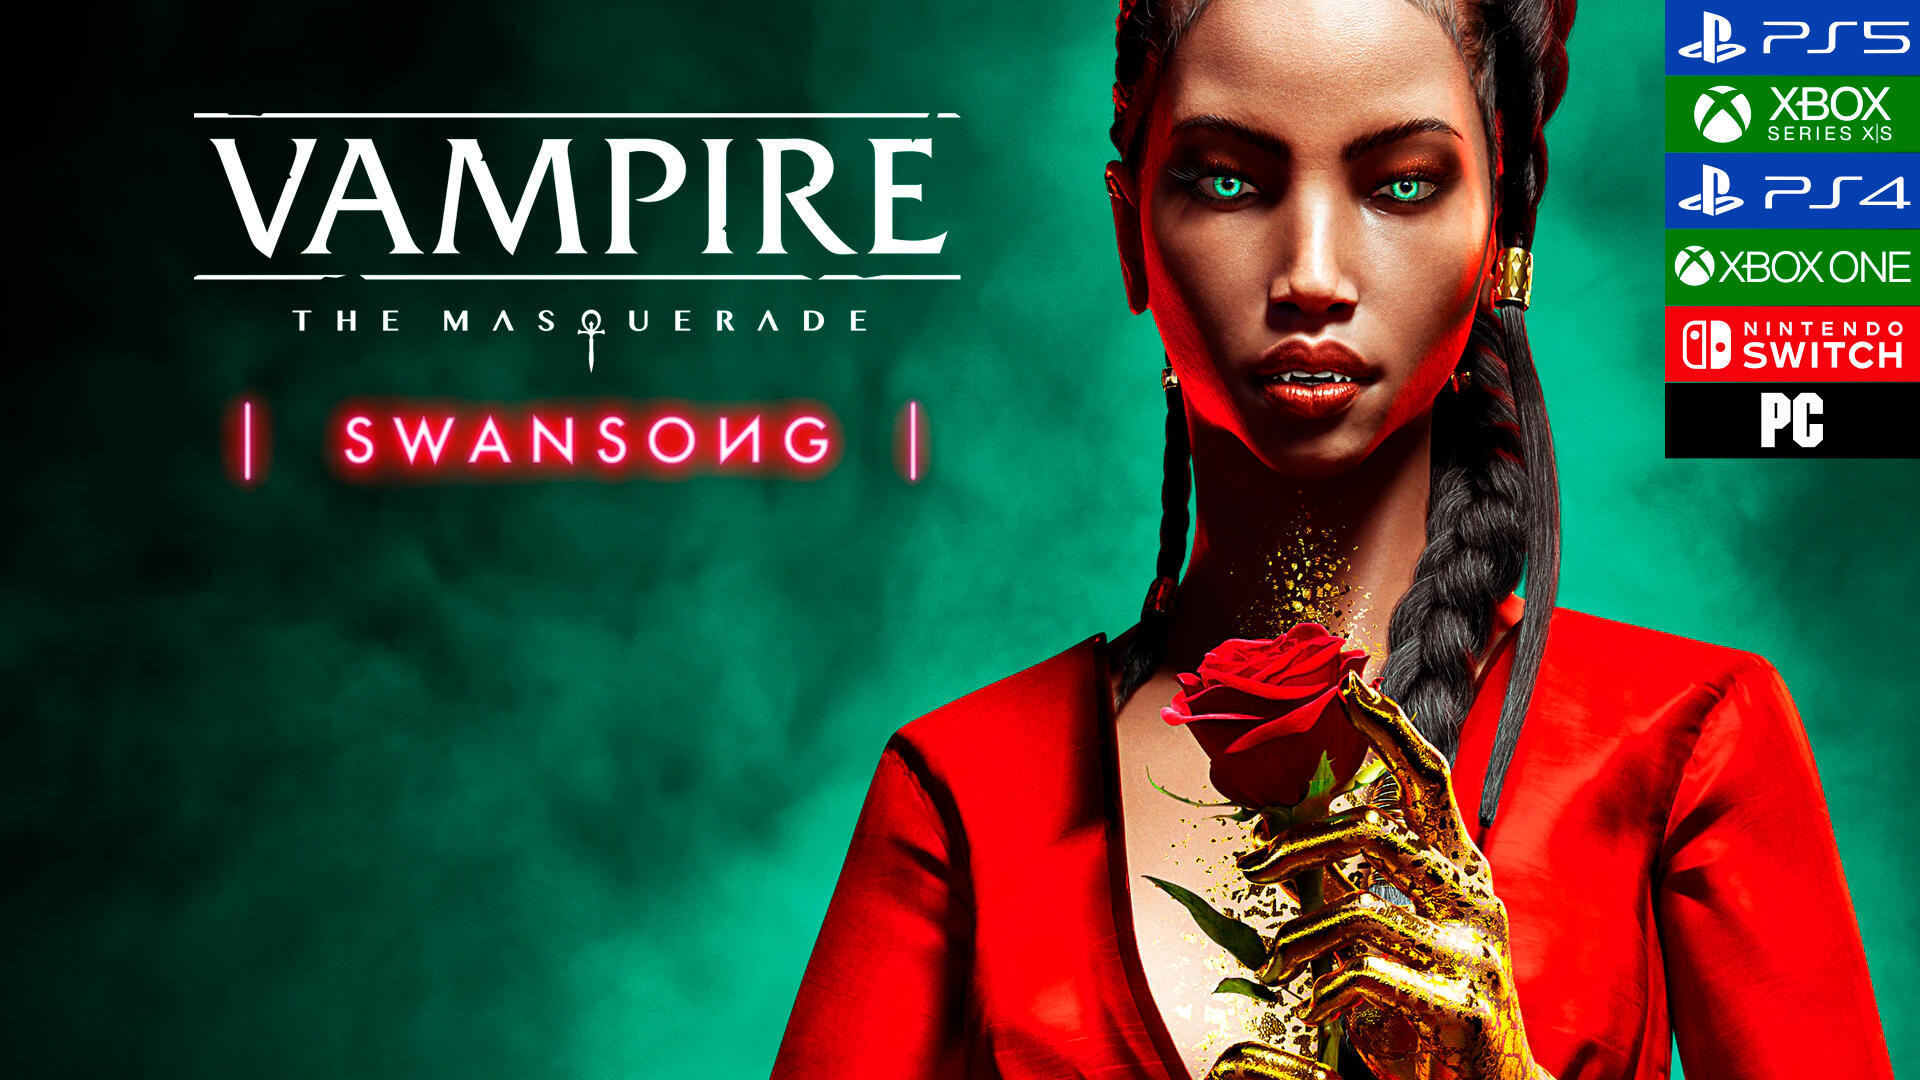 Vampire: The Masquerade Swansong - PS4